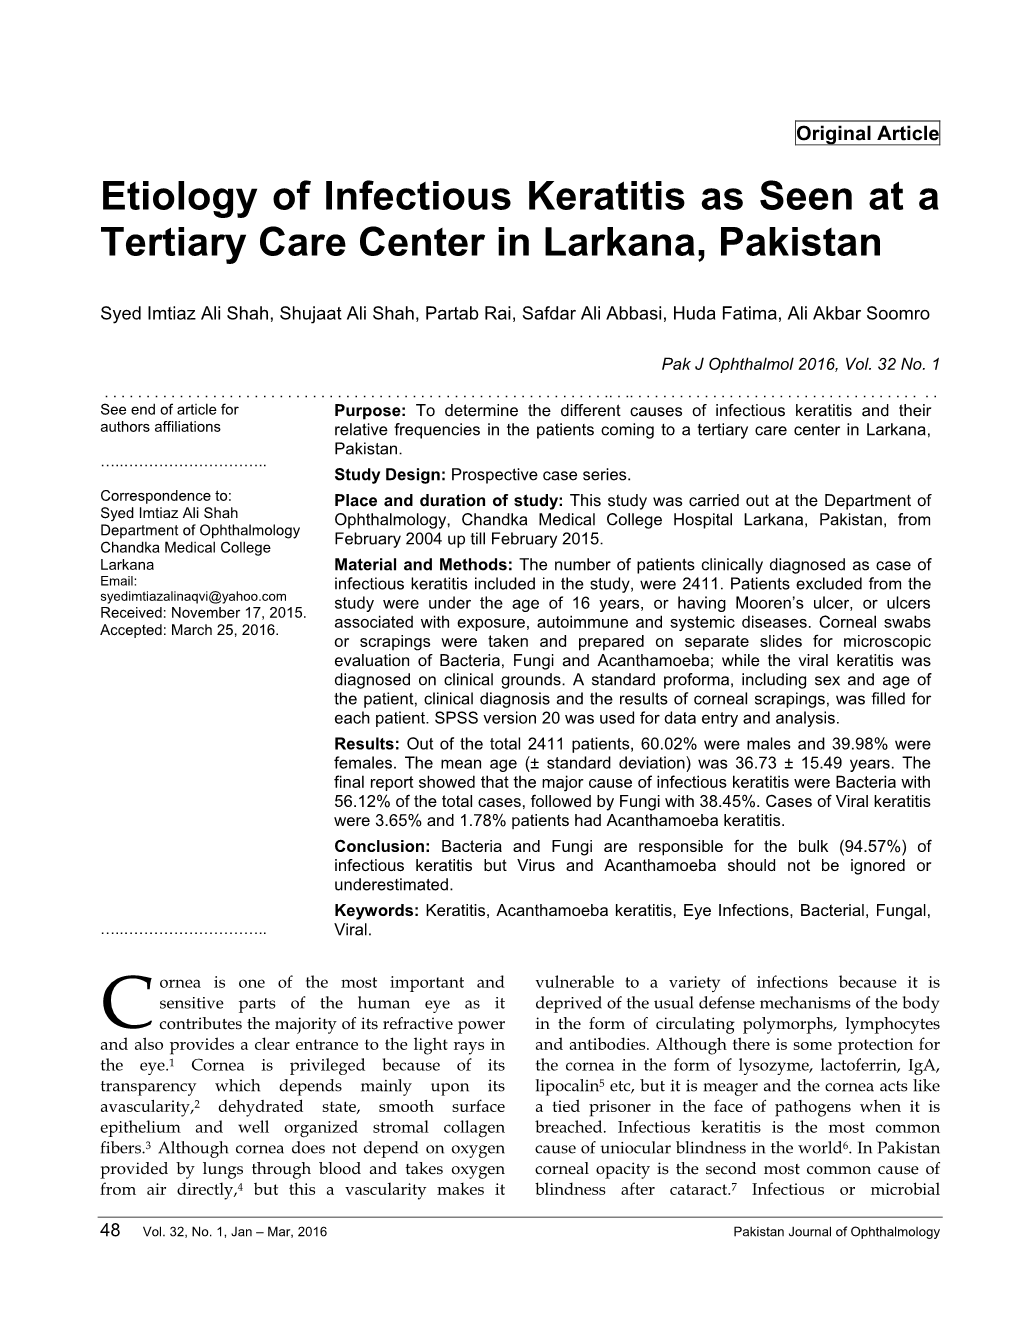 Etiology of Infectious Keratitis As Seen at a Tertiary Care Center in Larkana, Pakistan